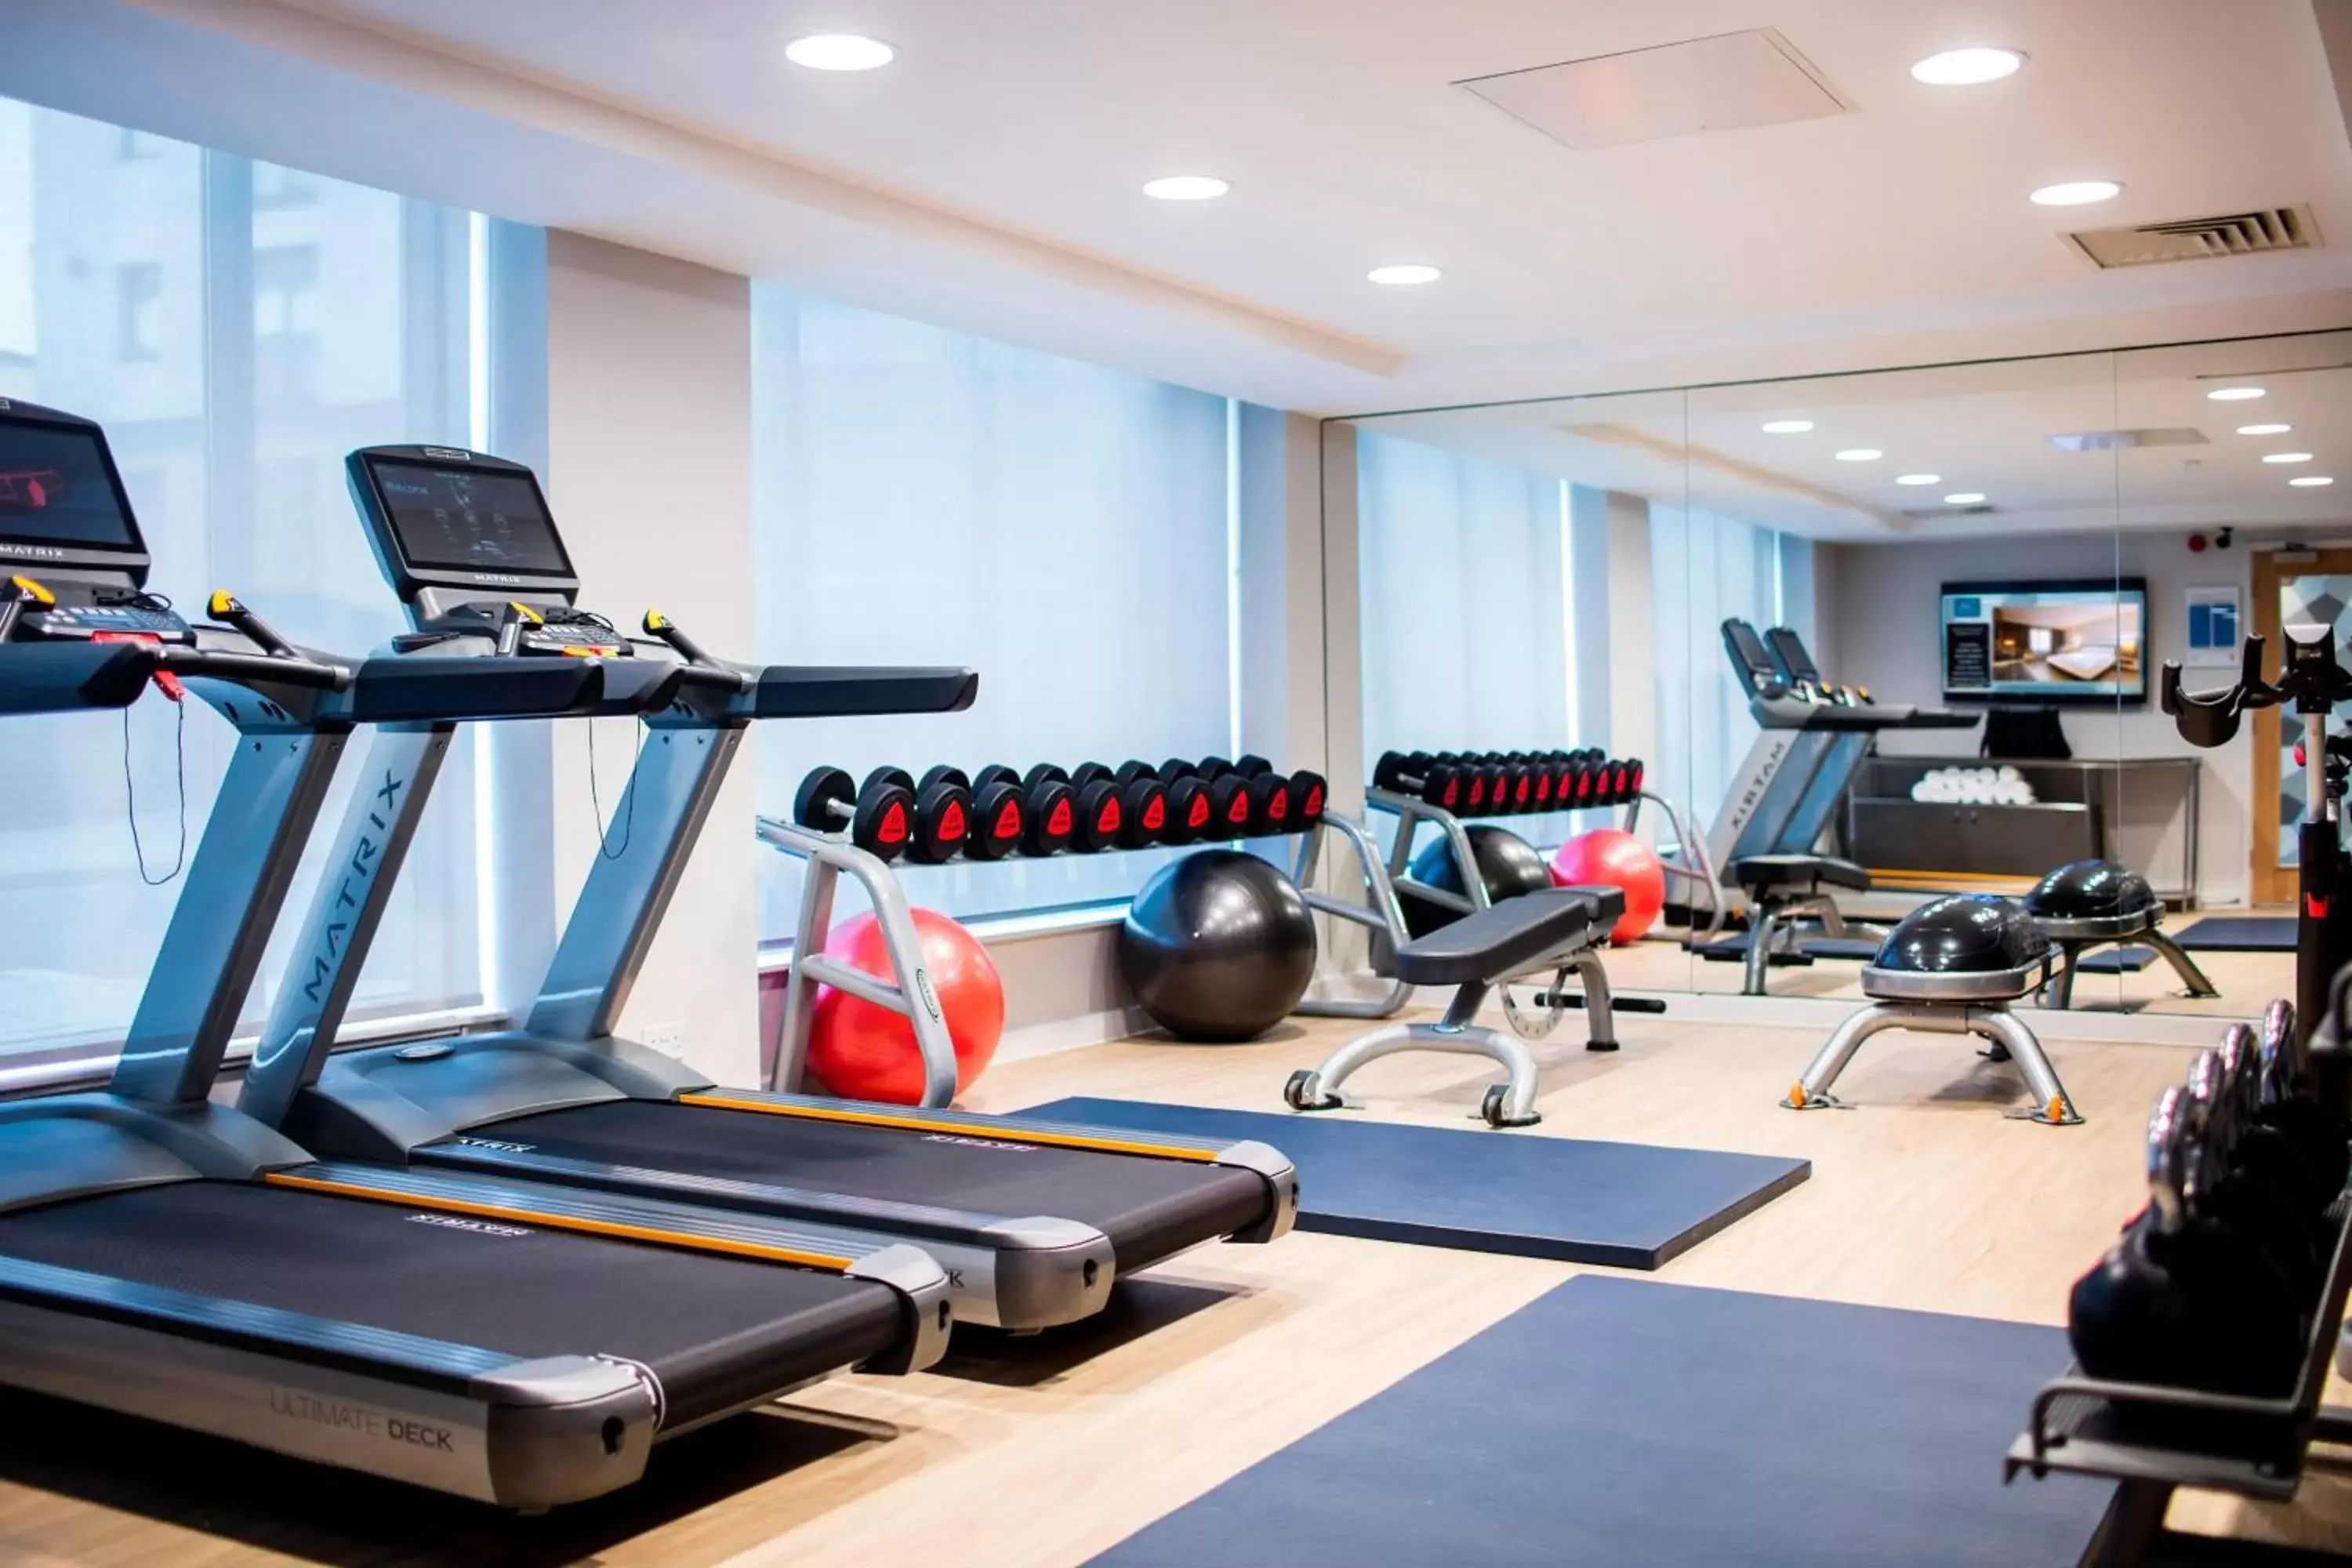 Fitness centre/facilities, Fitness Center/Facilities in AC Hotel by Marriott Birmingham